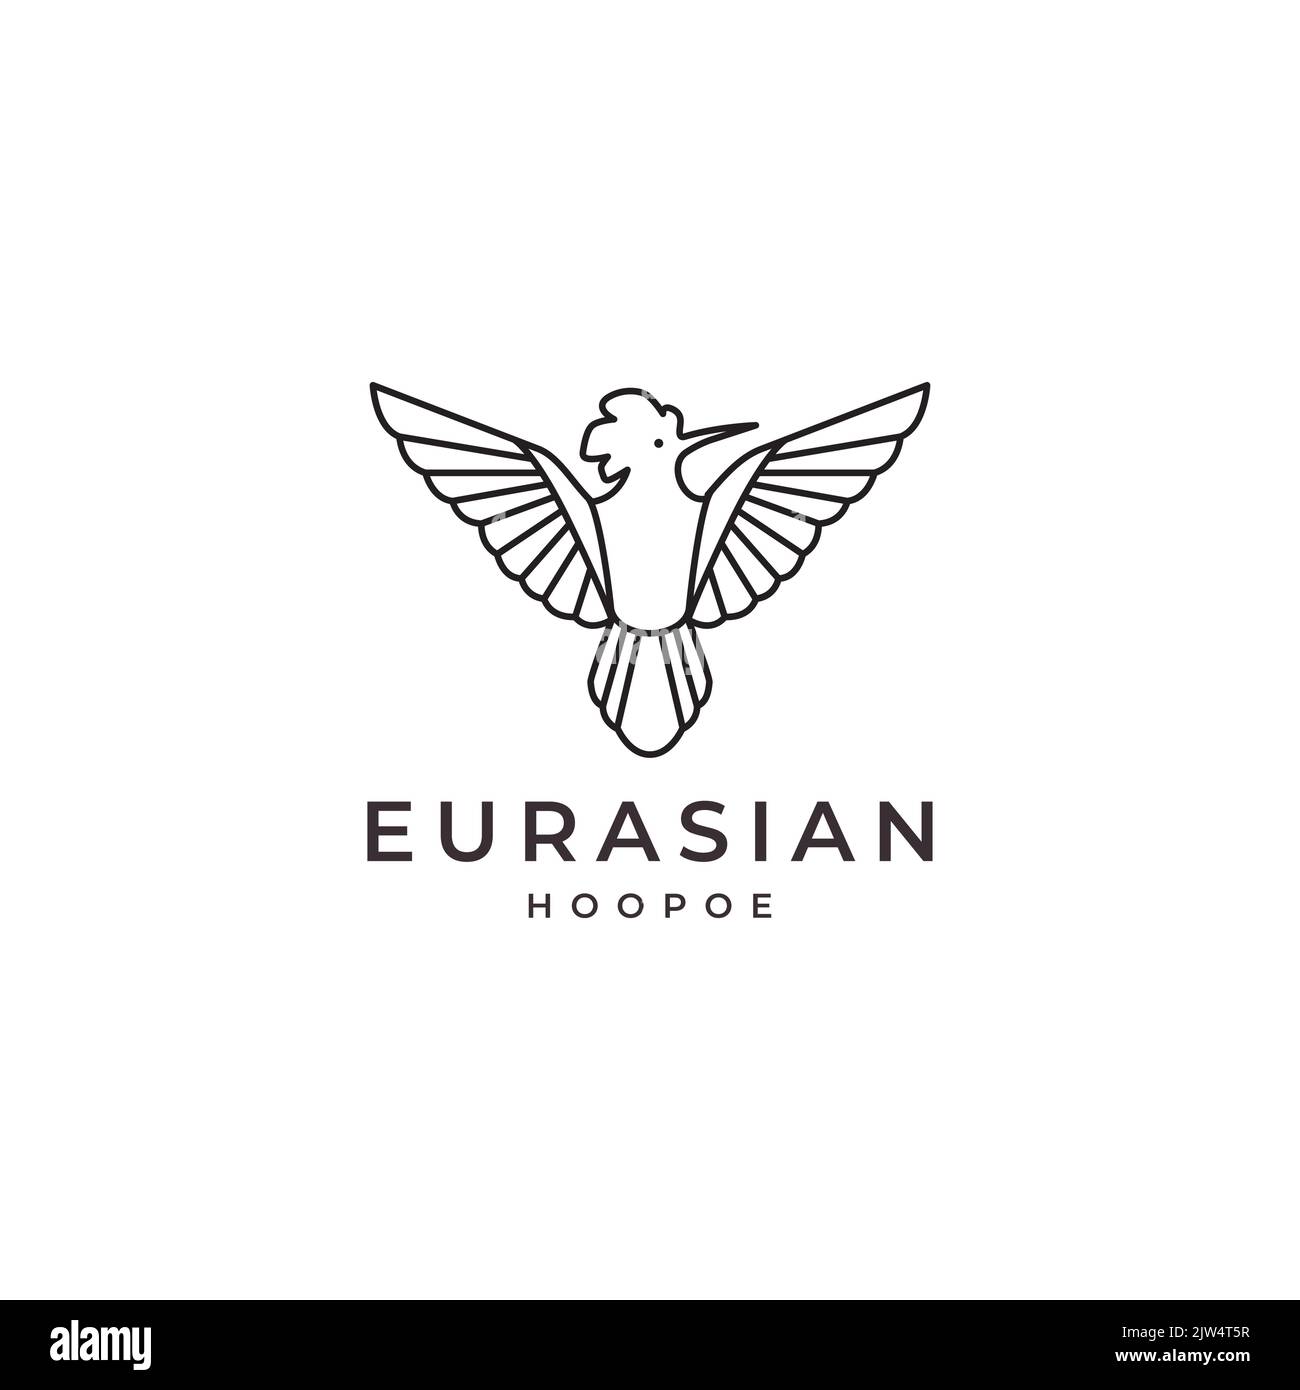 flying bird eurasian hoopoe logo design Stock Vector